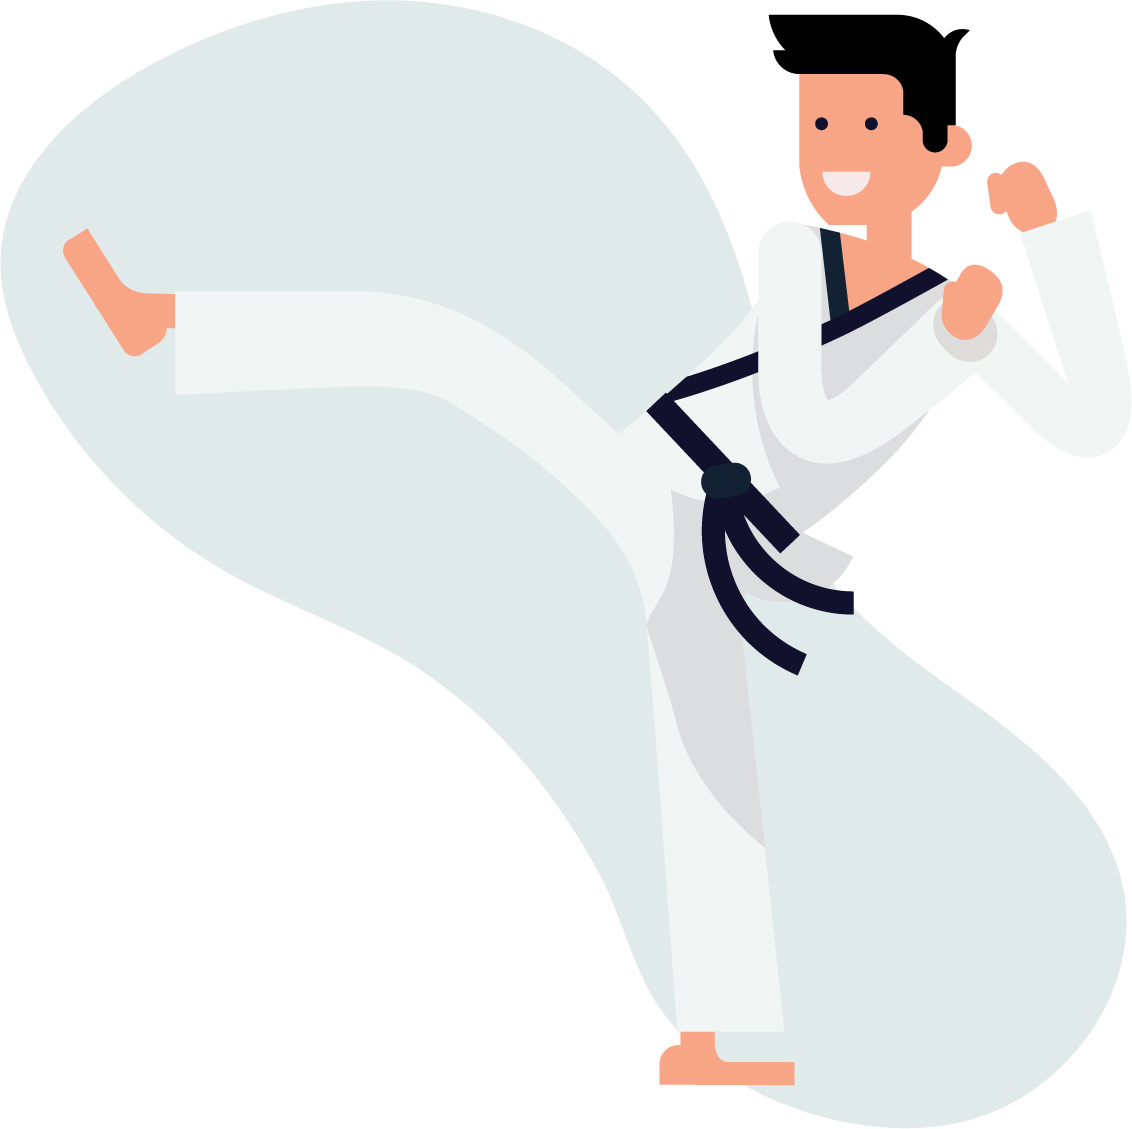 Karate - Social Skills Group